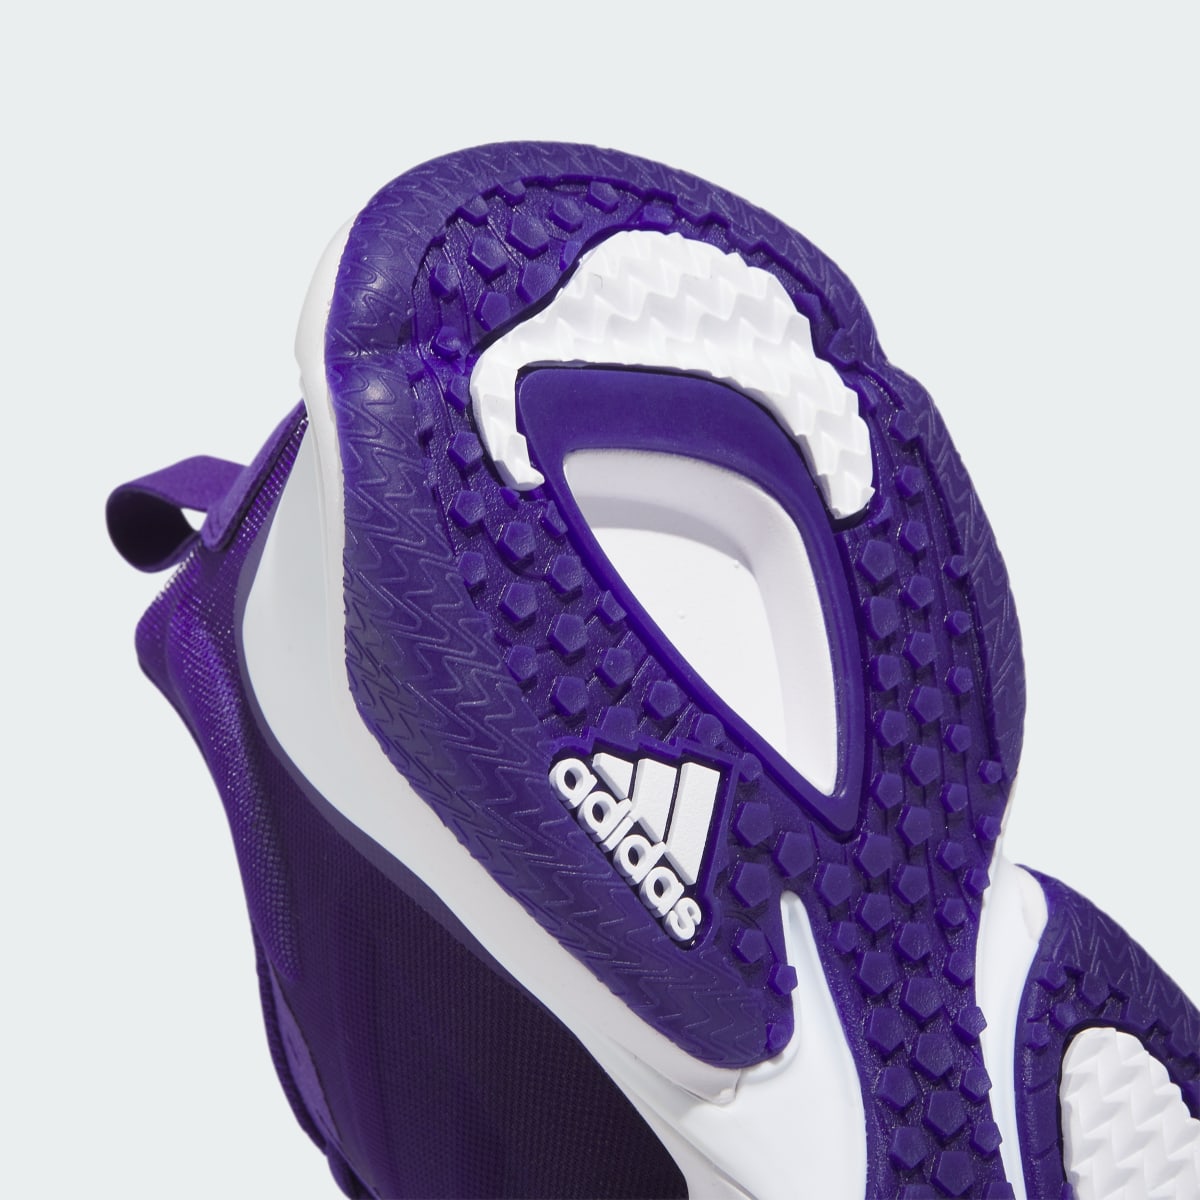 Adidas Impact FLX II Turf Training Shoes. 9